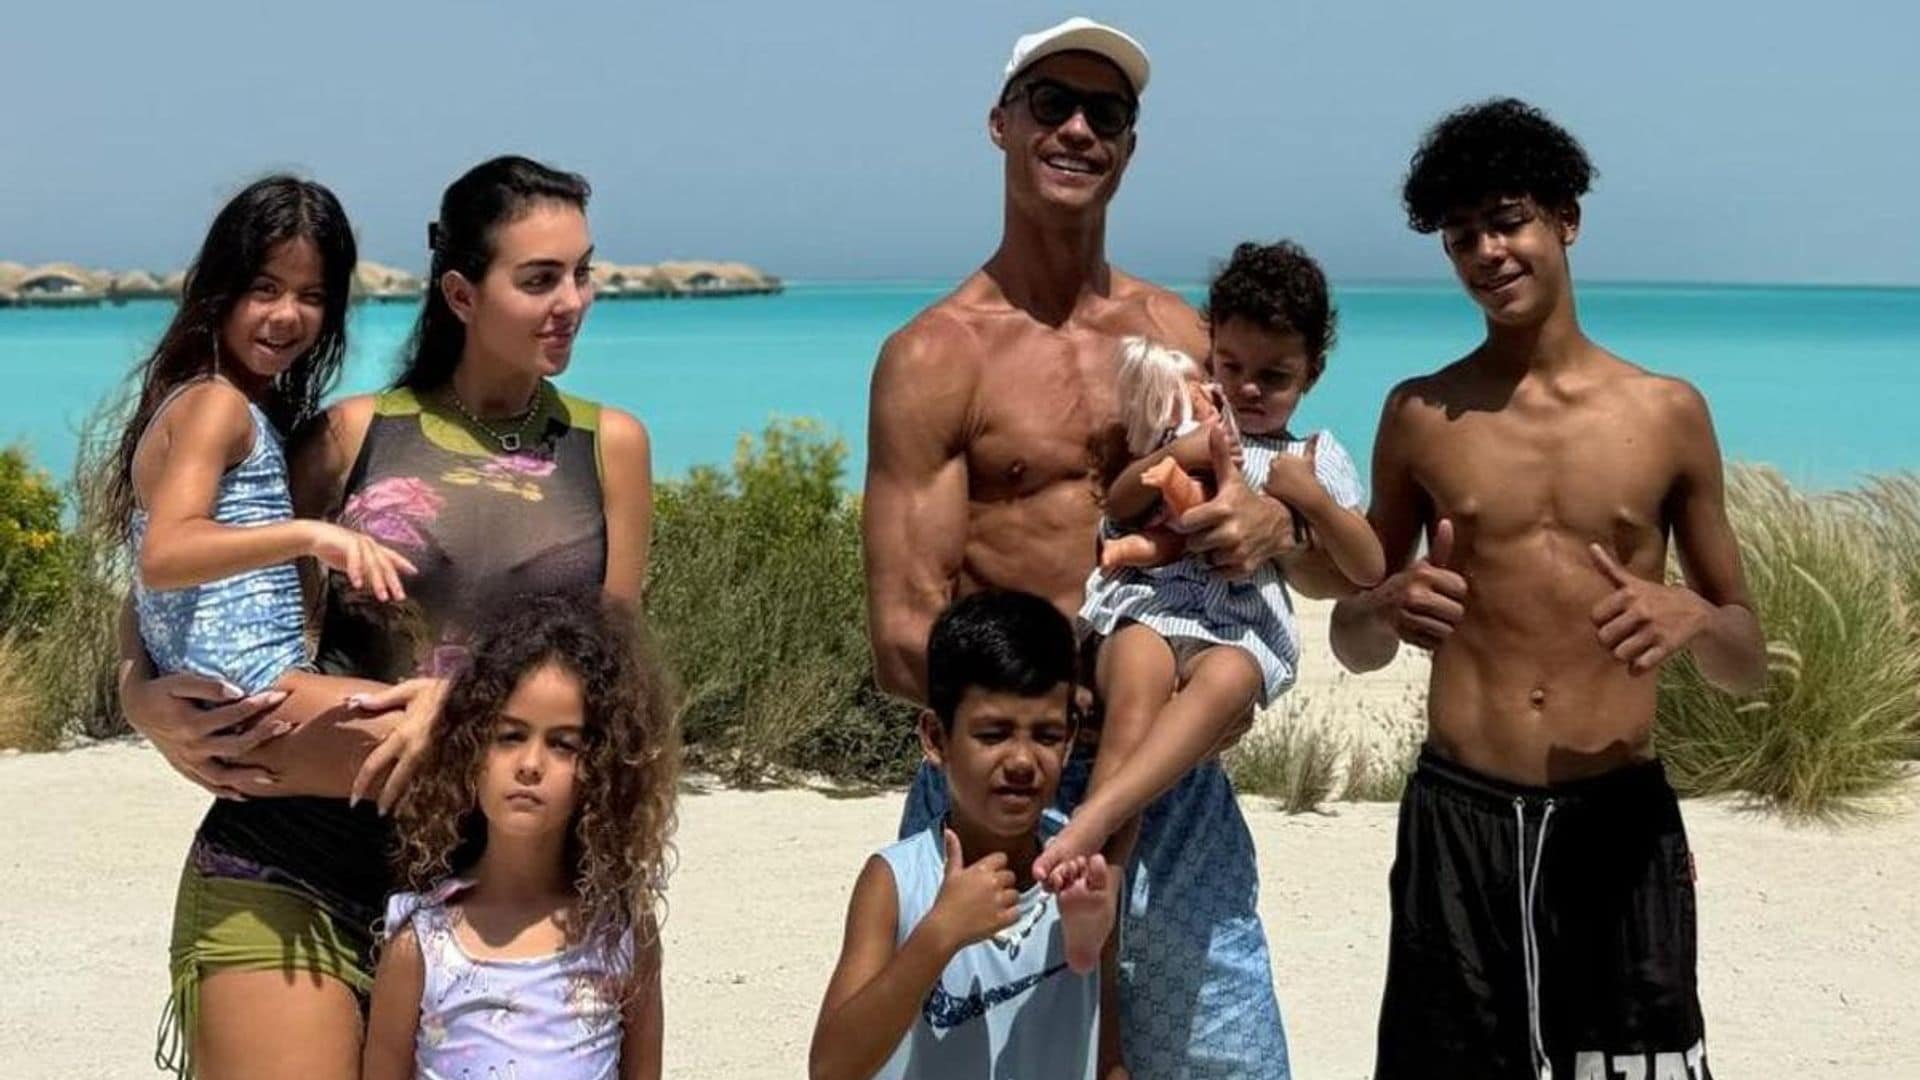 Georgina Rodríguez and Cristiano Ronaldo return to one of their favorite destinations with their family